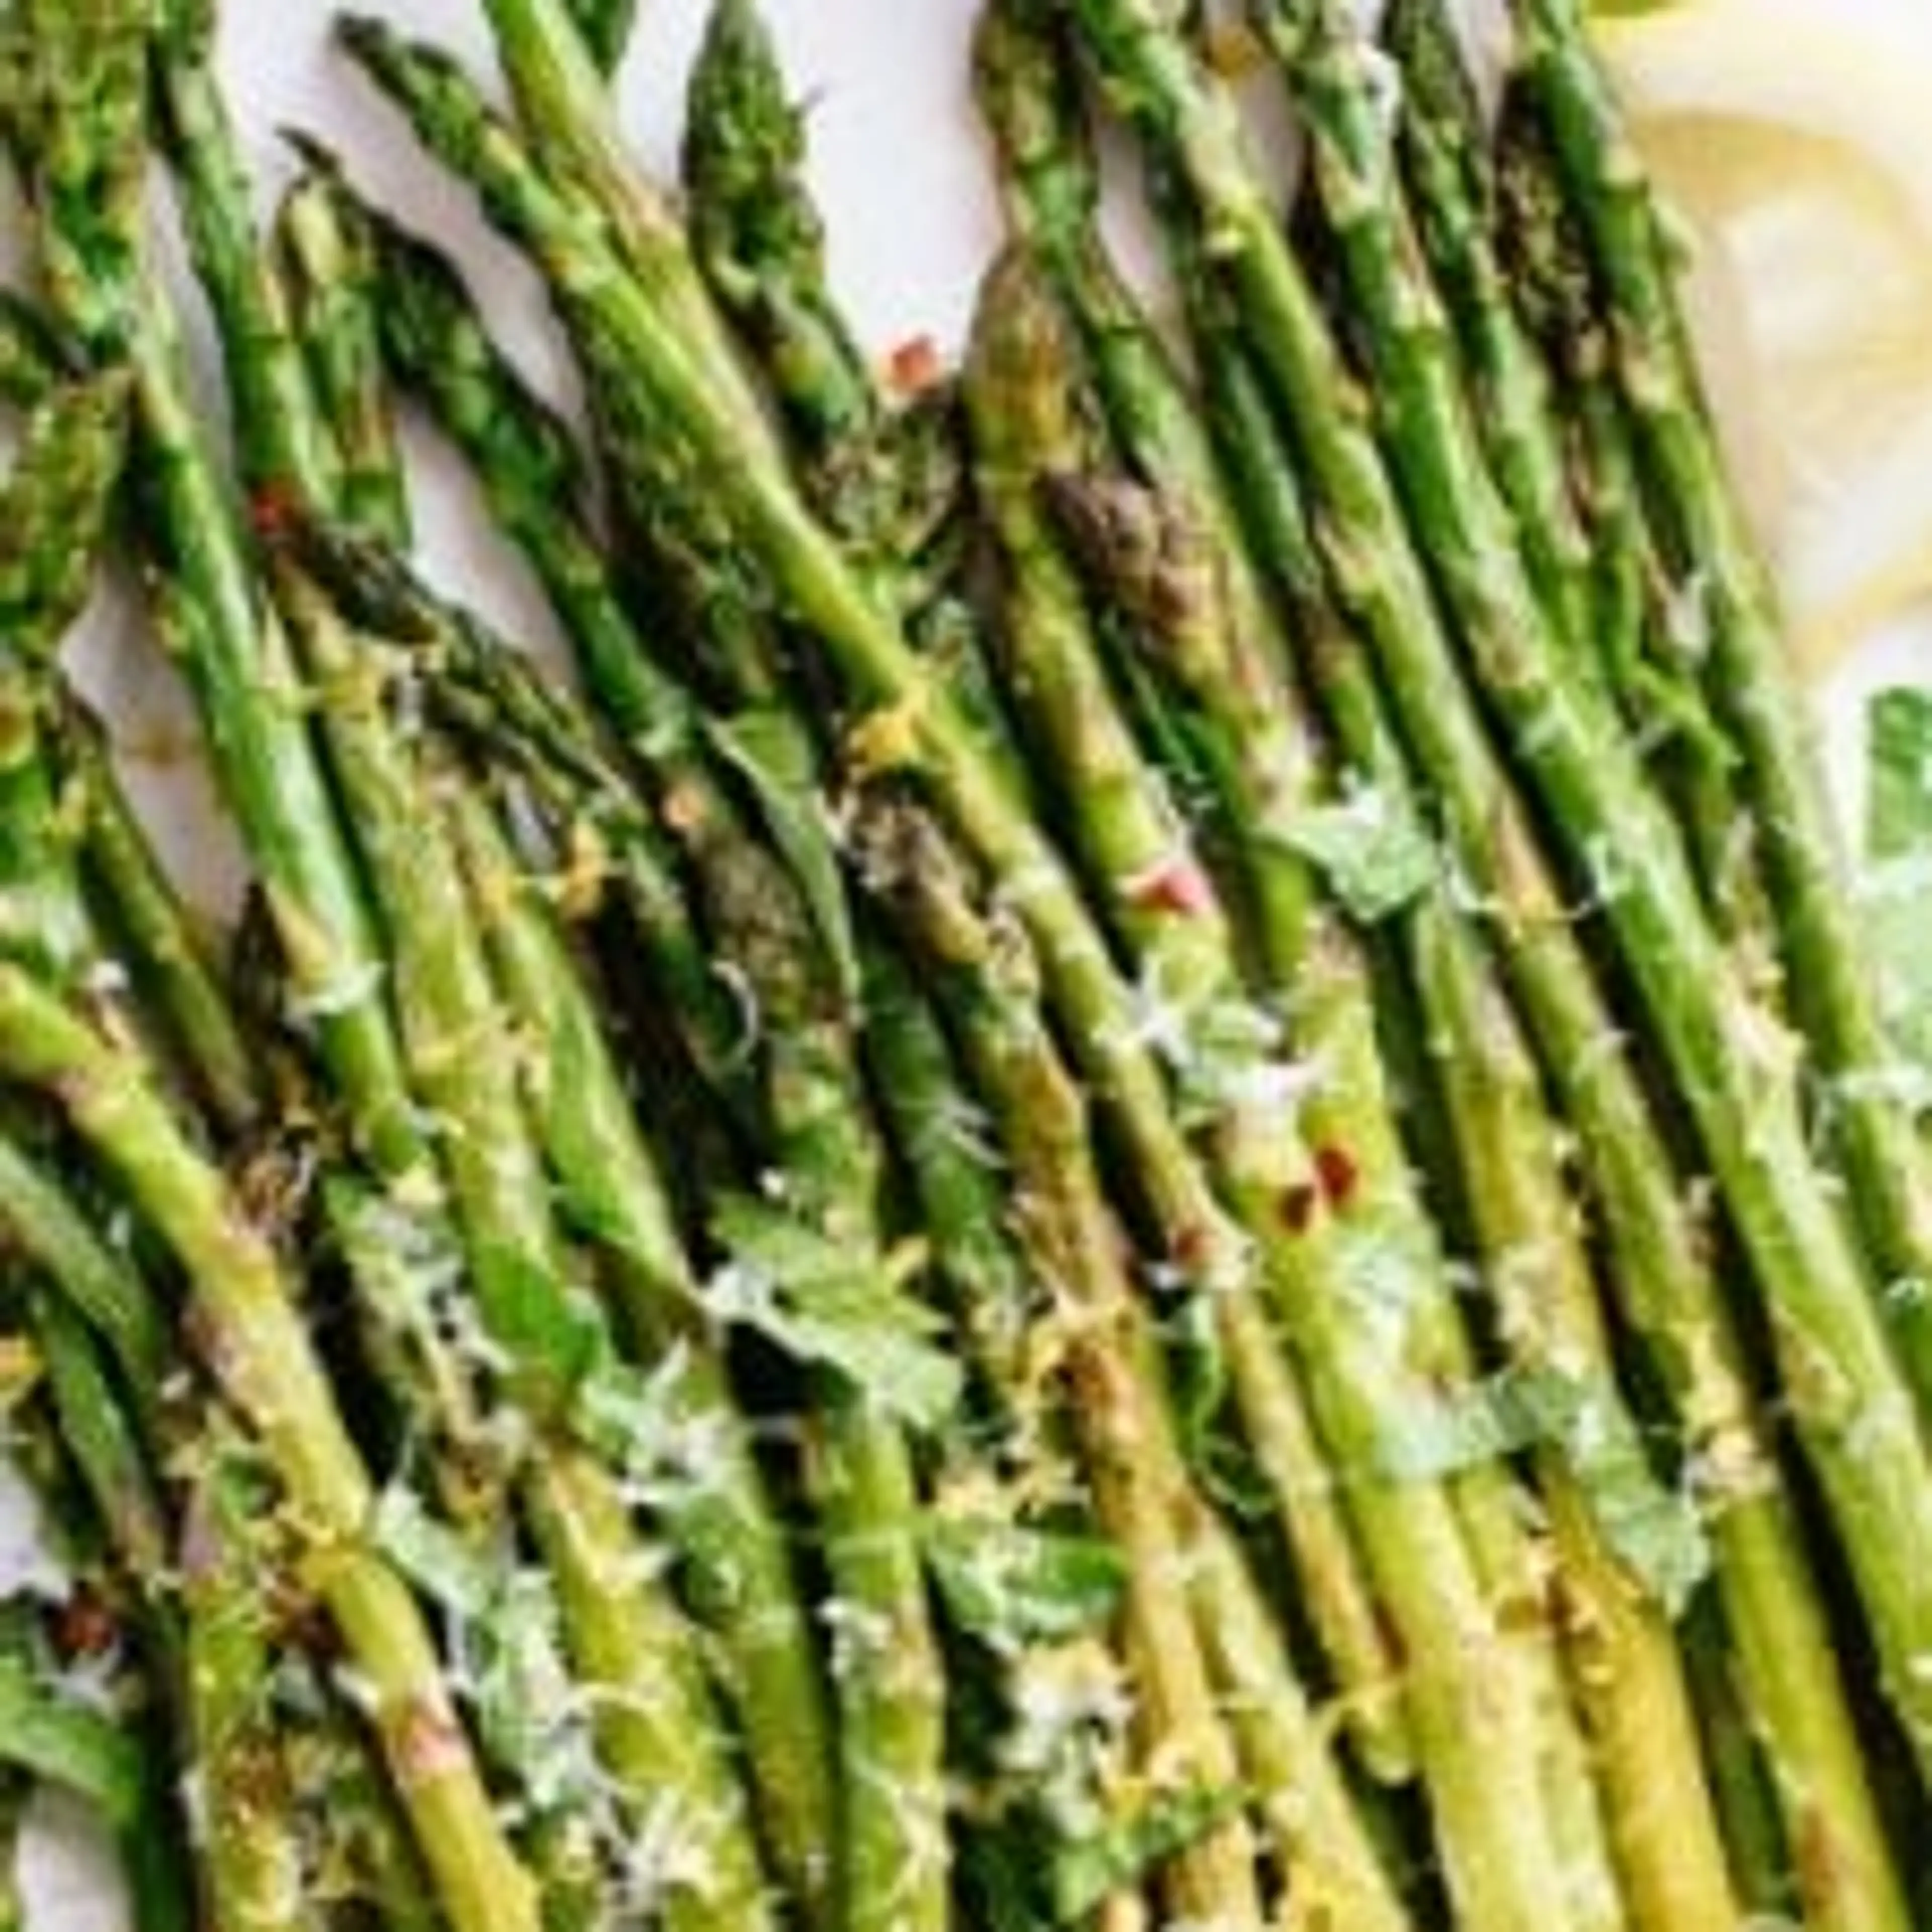 Perfect Roasted Asparagus